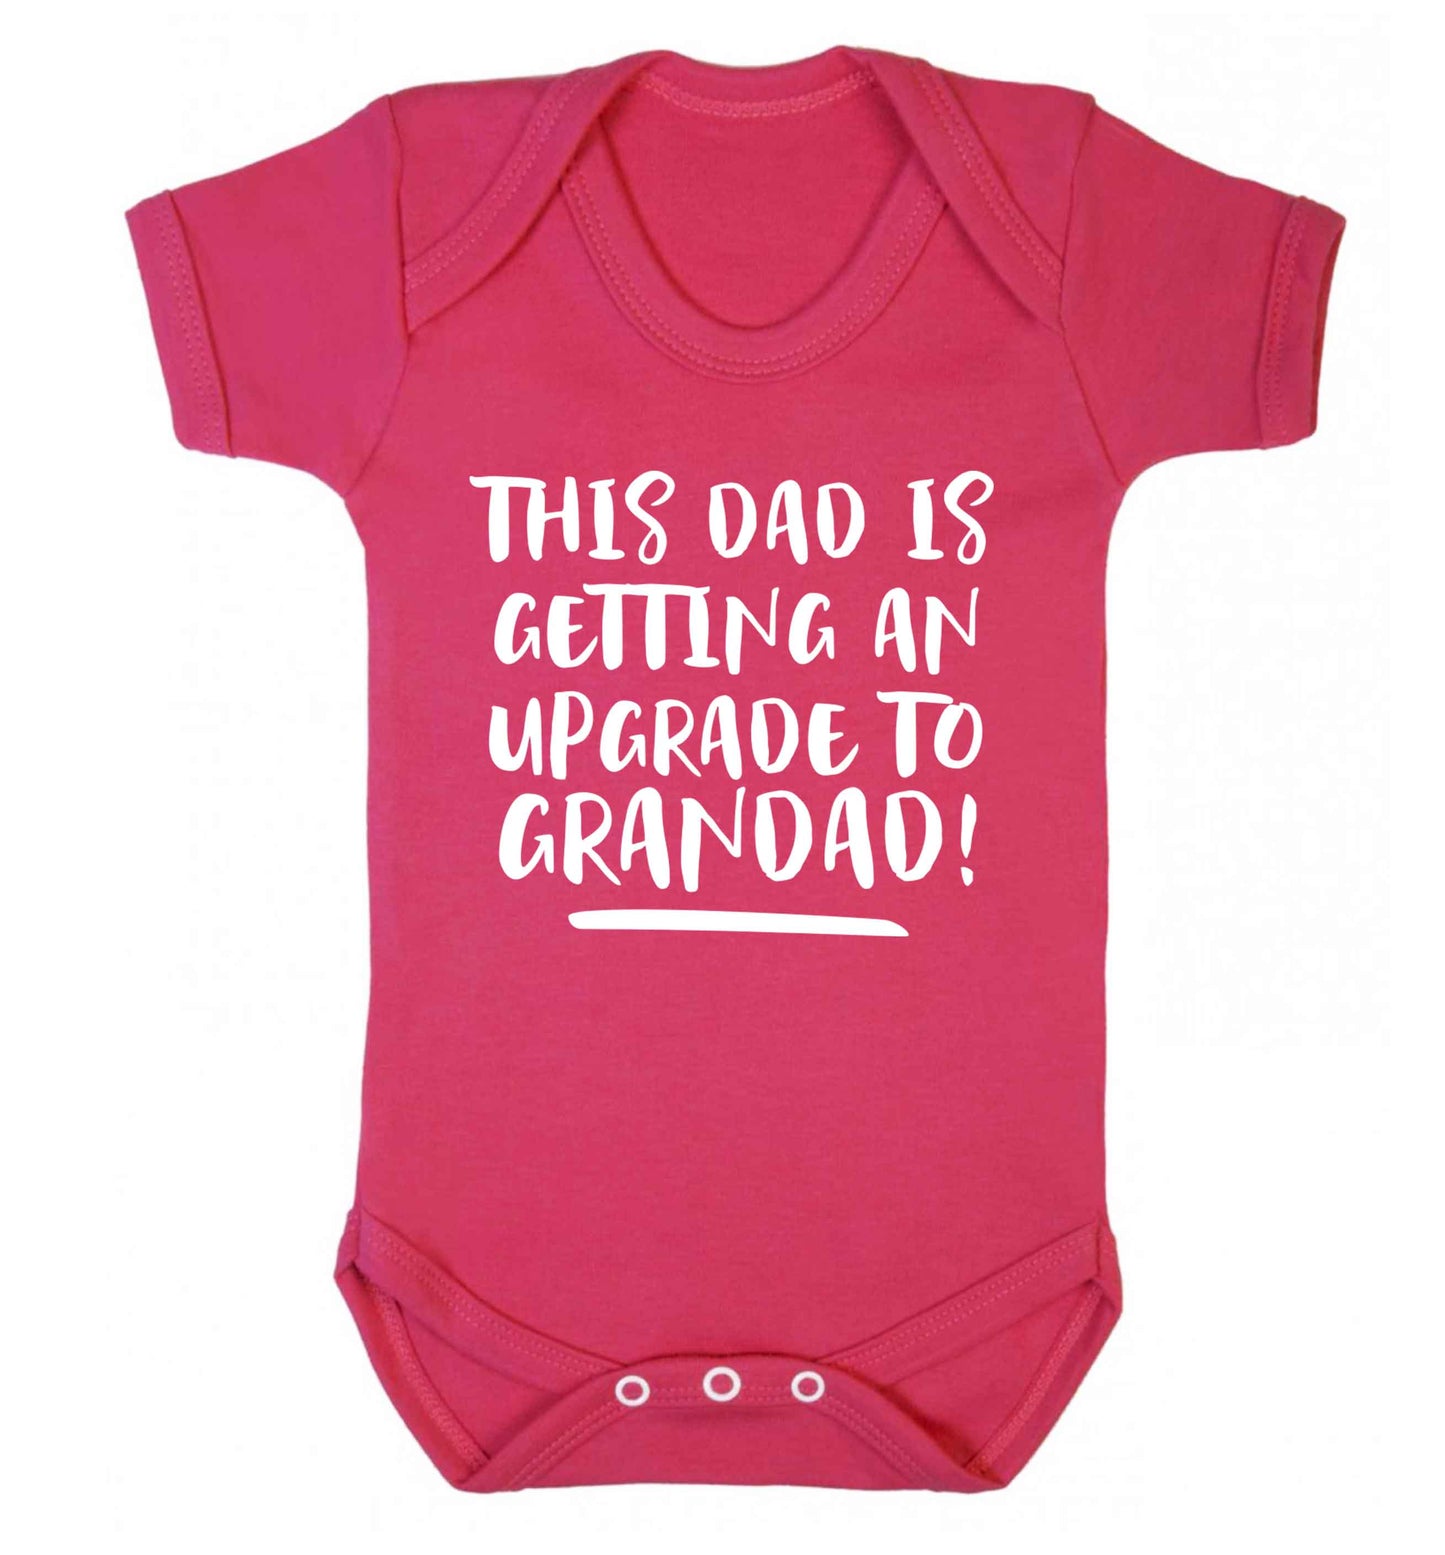 This dad is getting an upgrade to grandad! Baby Vest dark pink 18-24 months